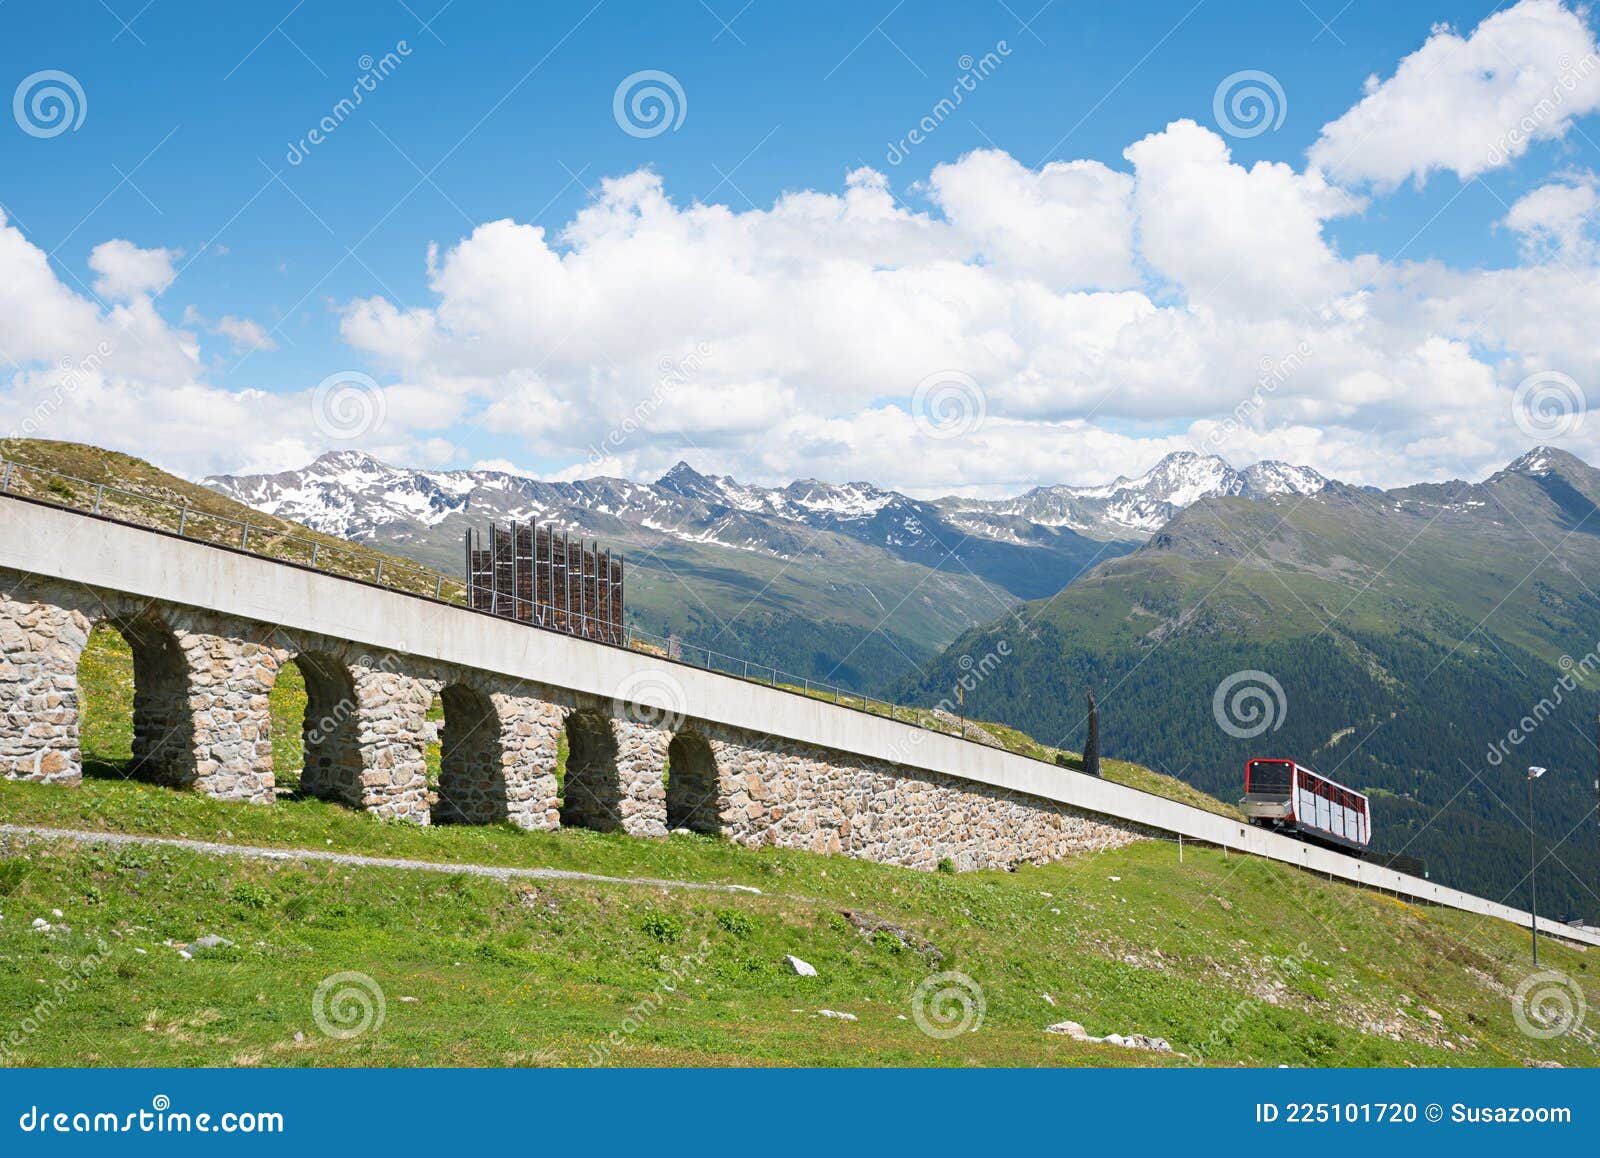 steep funicular railway parsenn mountain landscape weiÃÅ¸fluhjoch davos, landscape switzerland